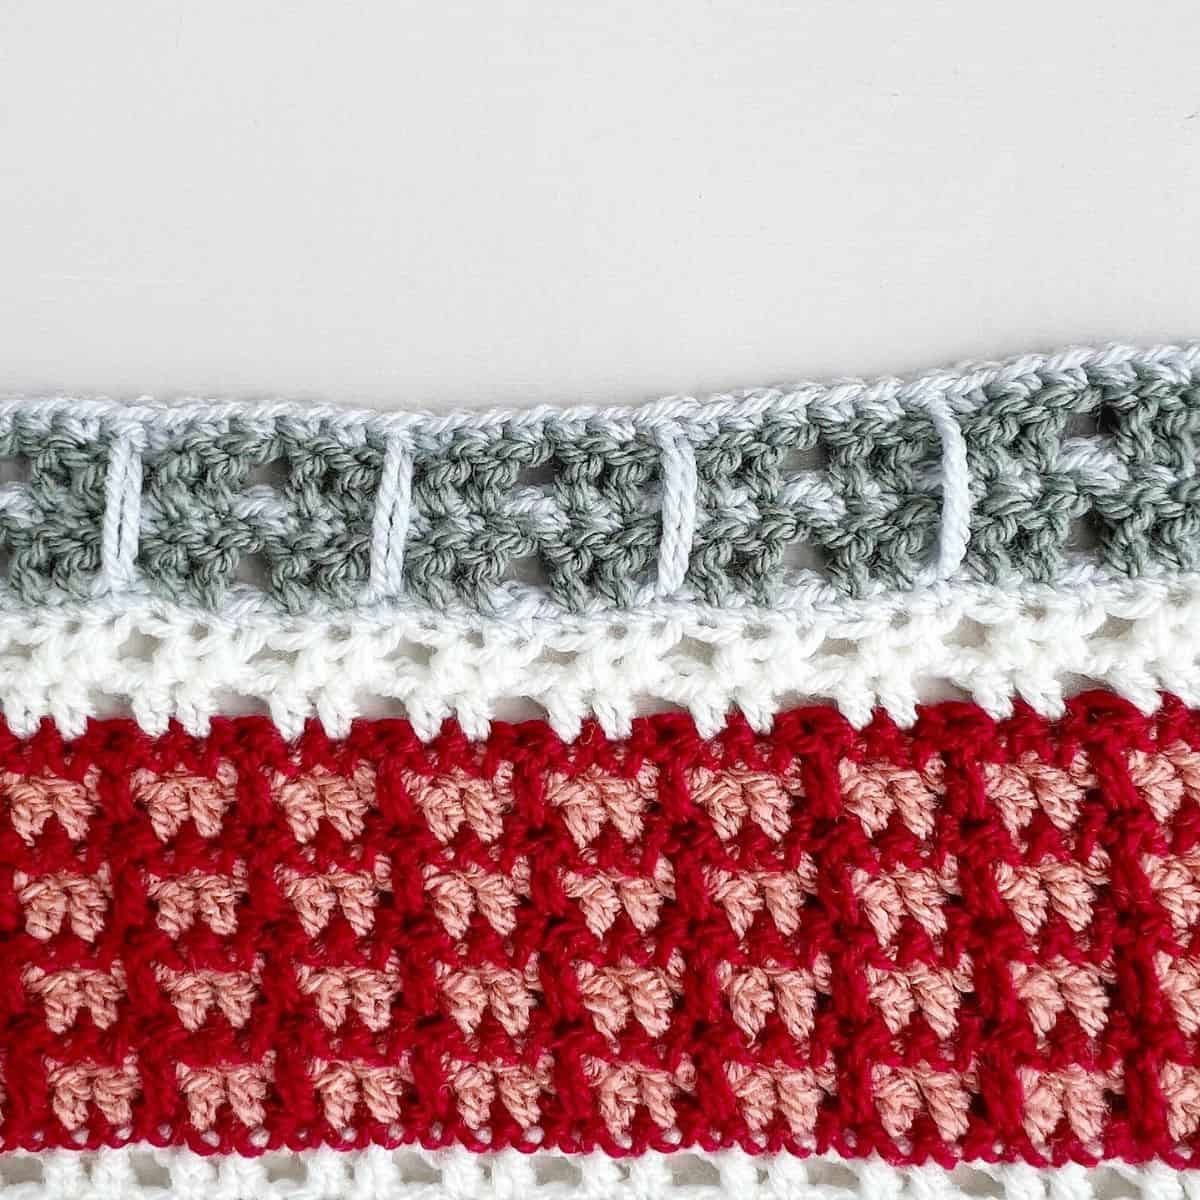 Quick Puff Stitch Crochet Mittens - A free crochet pattern